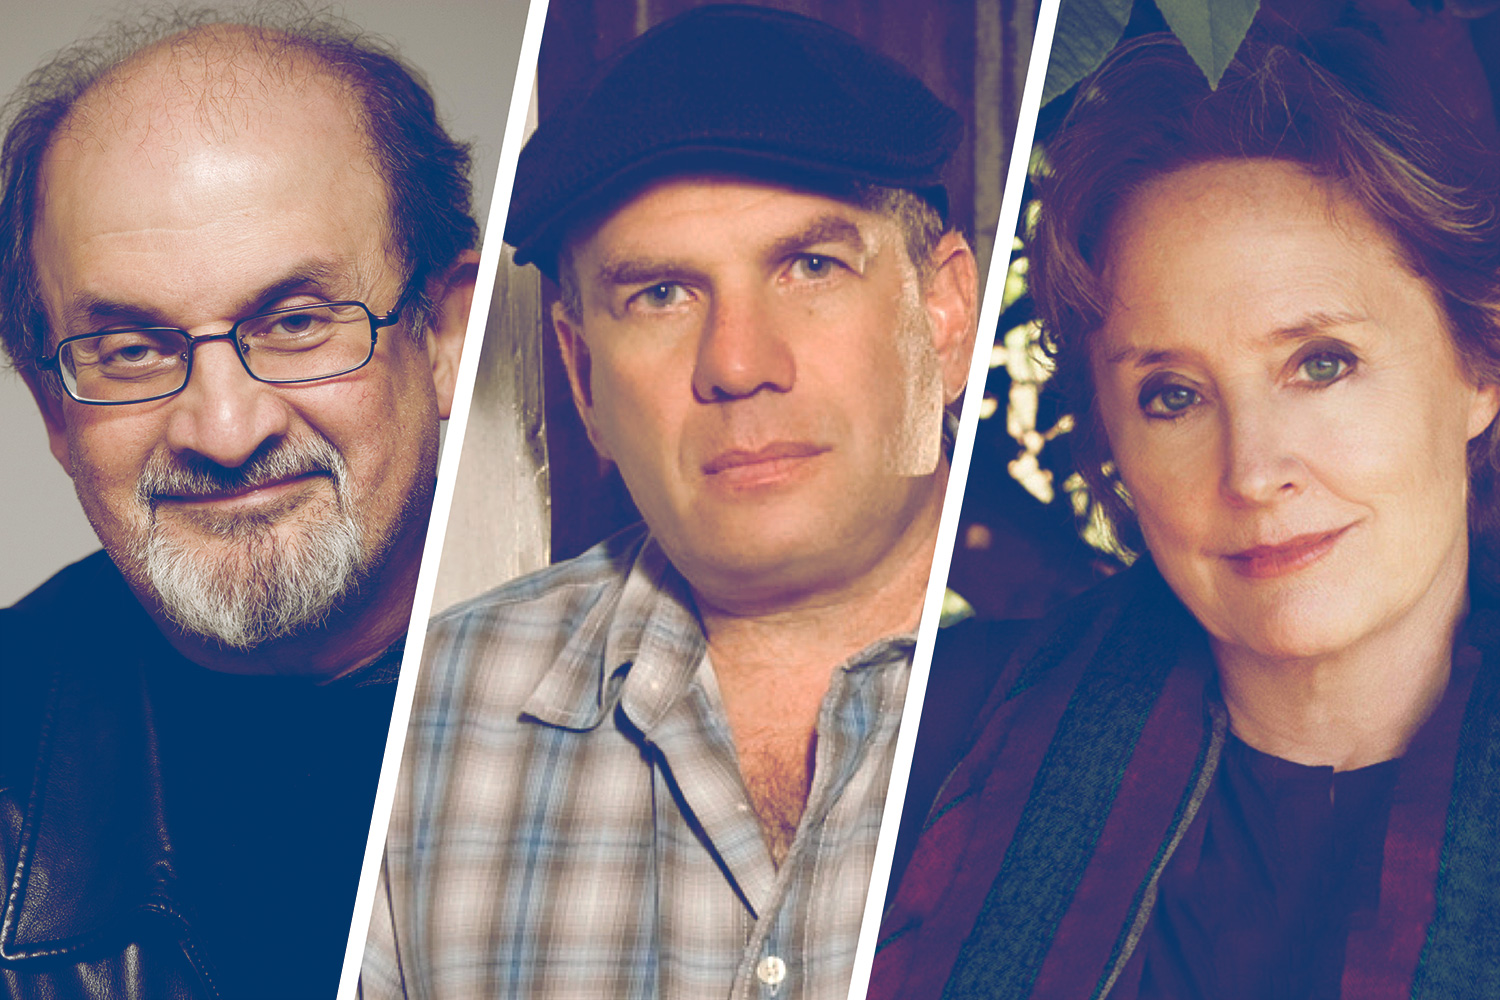 headshots left to right: Salman Rushdie, David Simon, and  Alice Waters 